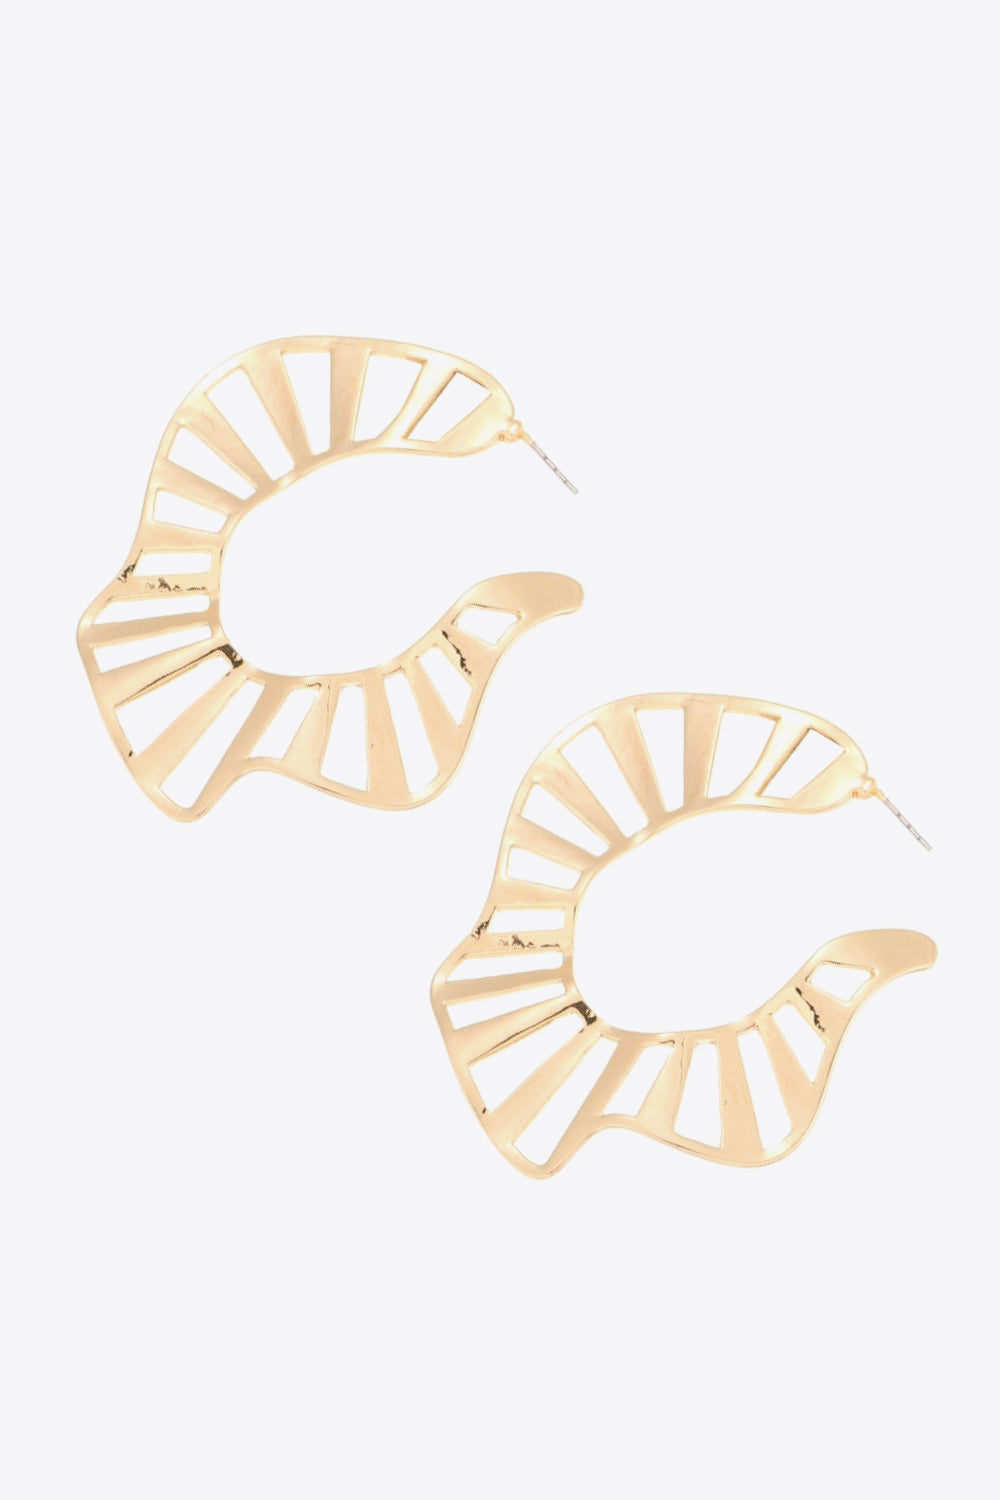 White Smoke Cutout Zinc Alloy C-Hoop Earrings Sentient Beauty Fashions earrings